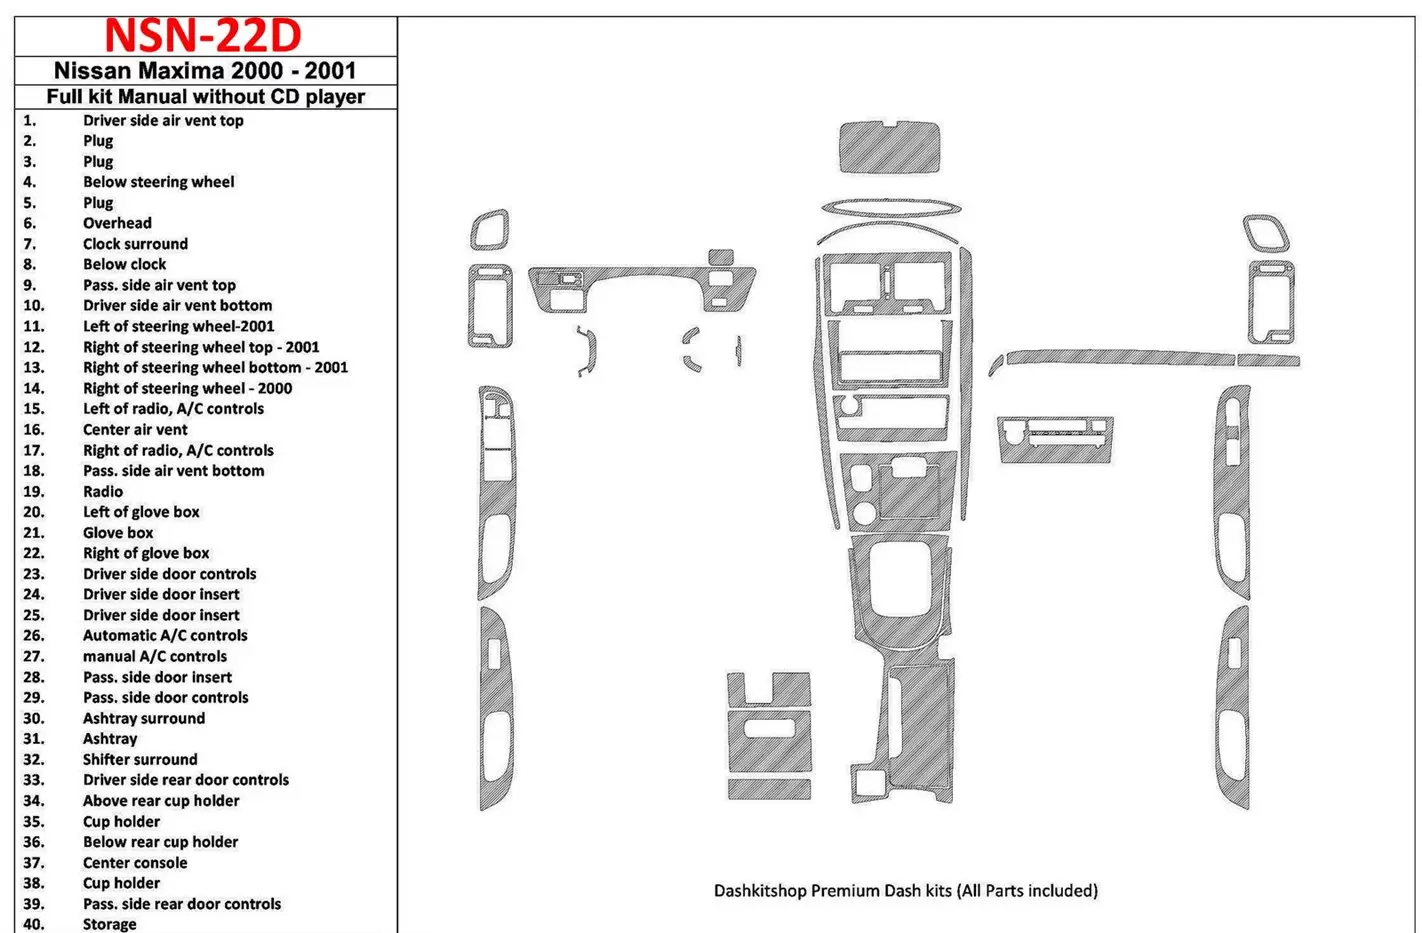 Nissan Maxima 2000-2001 Full Set, Manual Gearbox, Radio Without CD Player, 40 Parts set Interior BD Dash Trim Kit